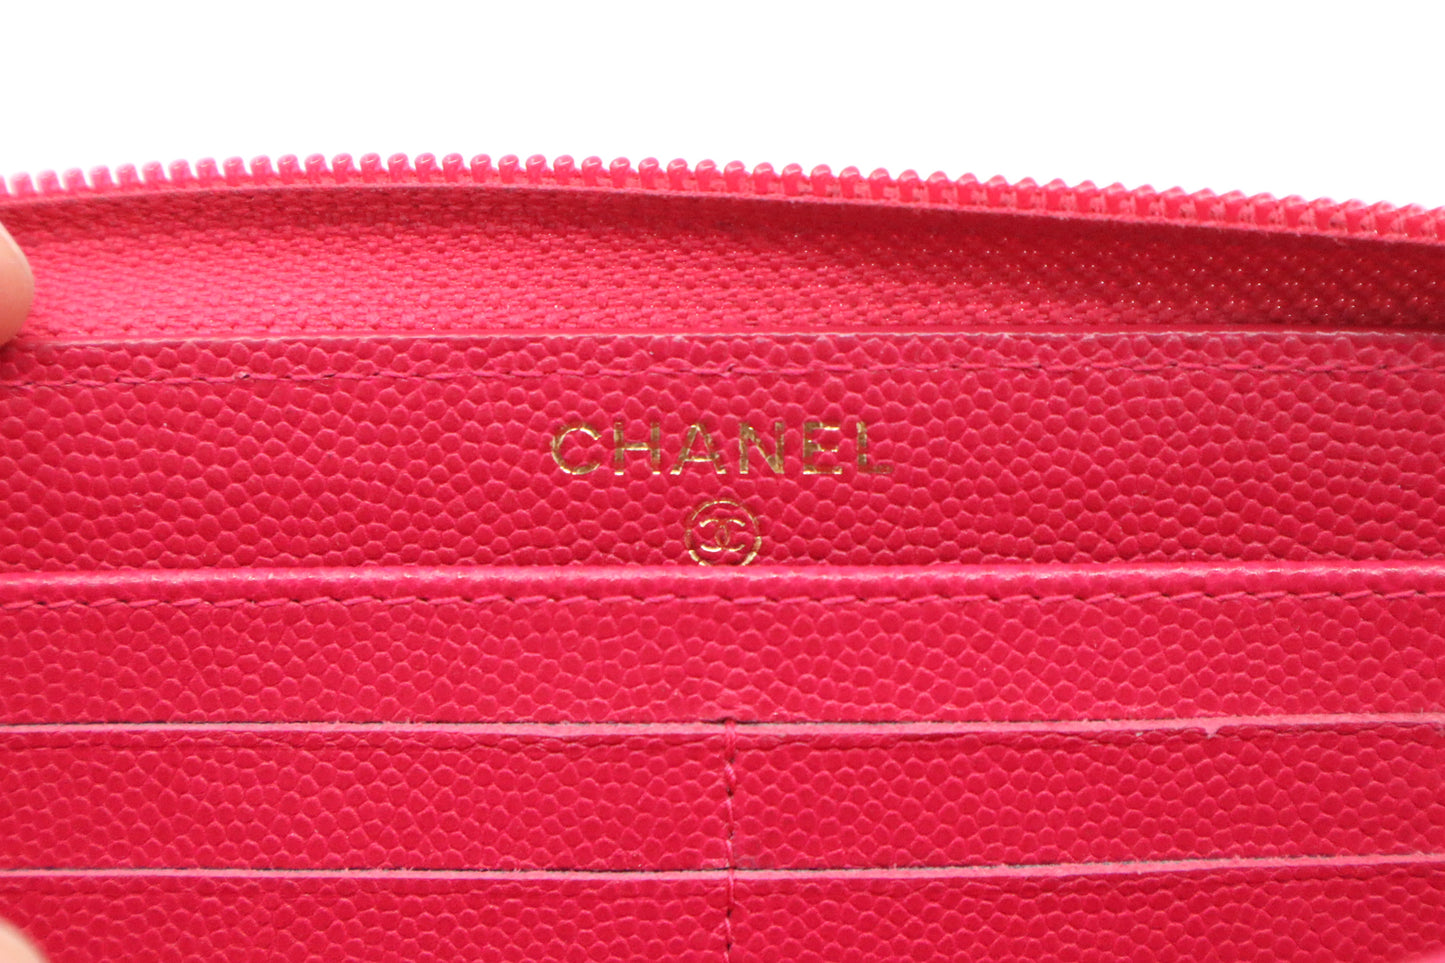 Chanel Boy Long Zippy in Pink Caviar Leather